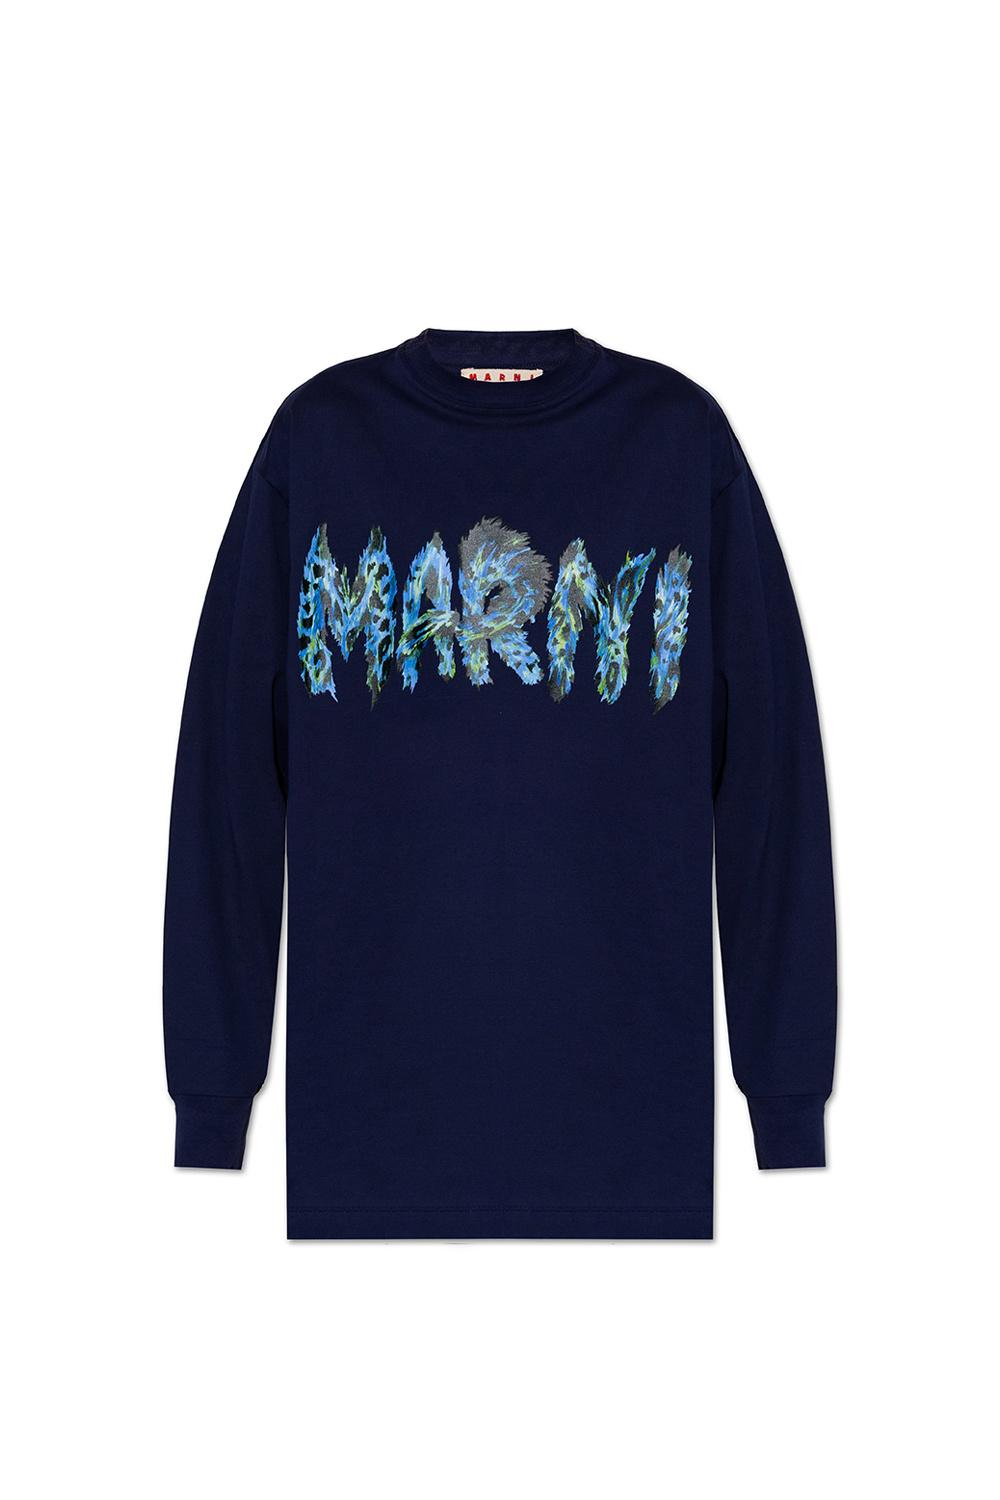 marni Running Long-sleeved T-shirt